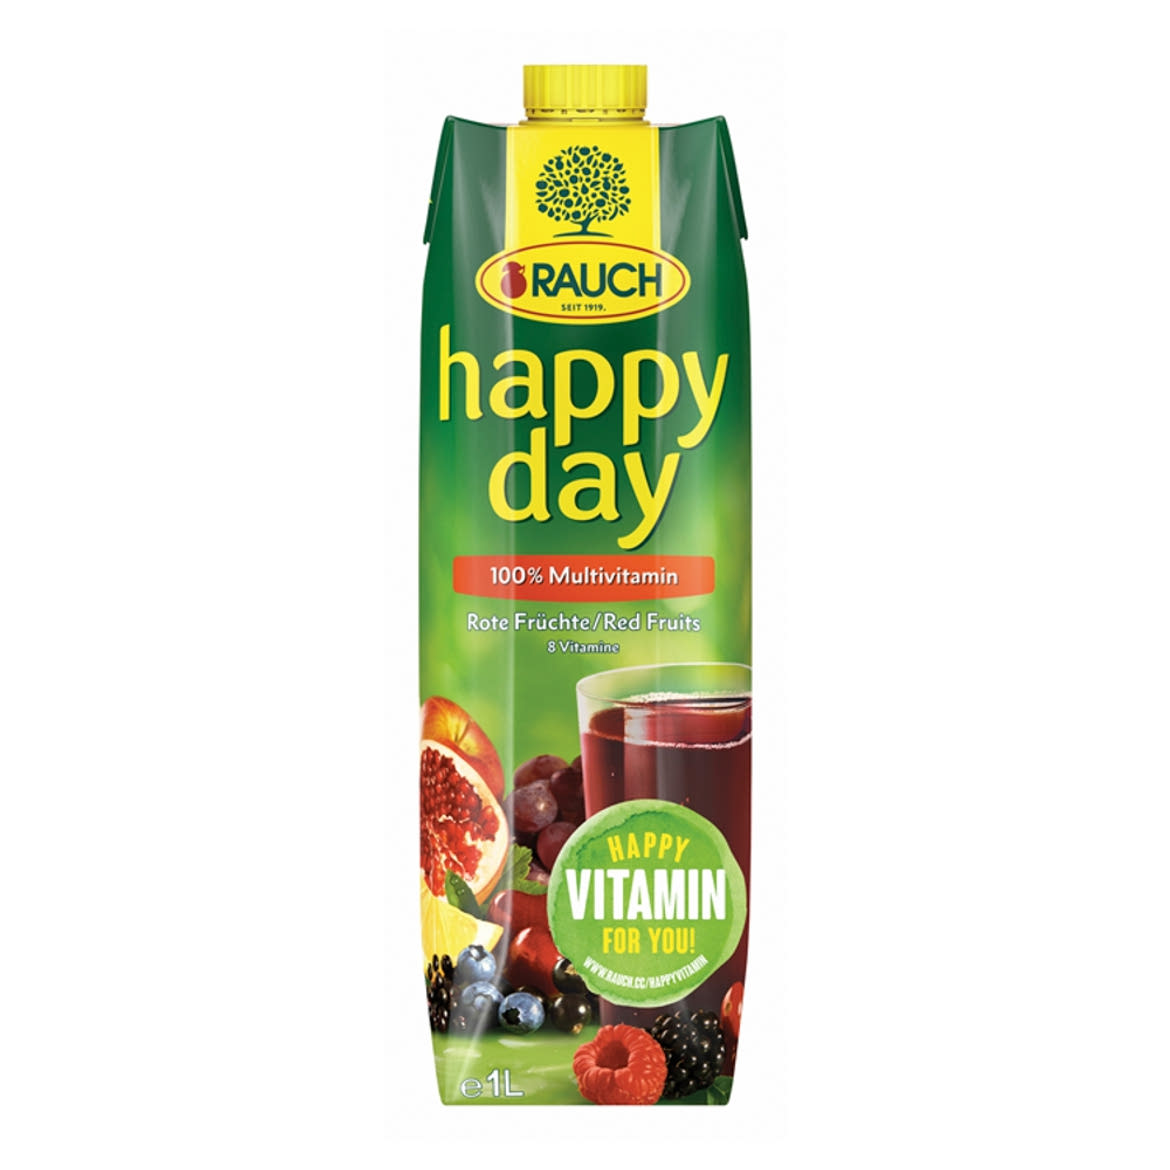 Rauch Happy Day 100% multivitamin vegyes gyümölcslé vegyes gyümölcslésűrítményekből 8 vitaminnal